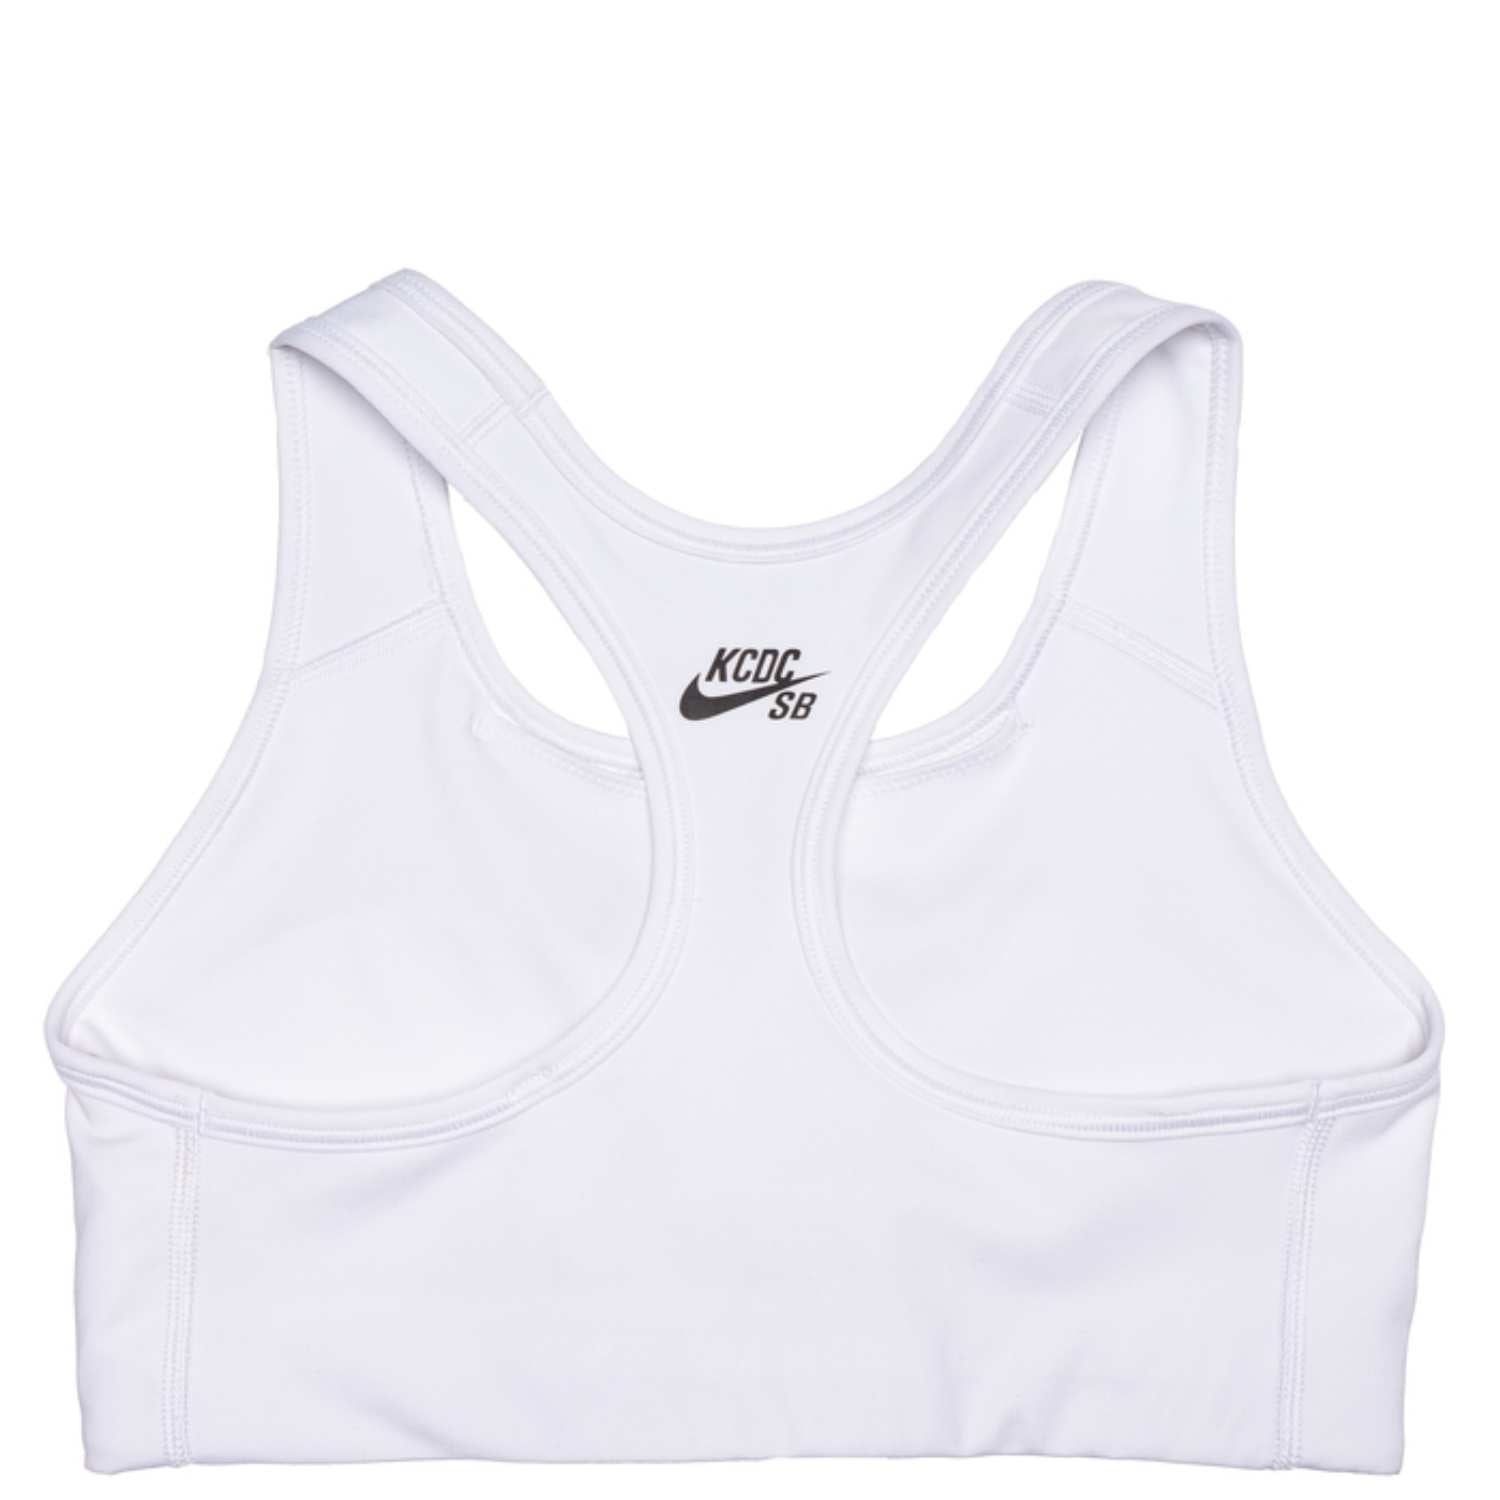 Nike Factory Store Grey Sports Bras.